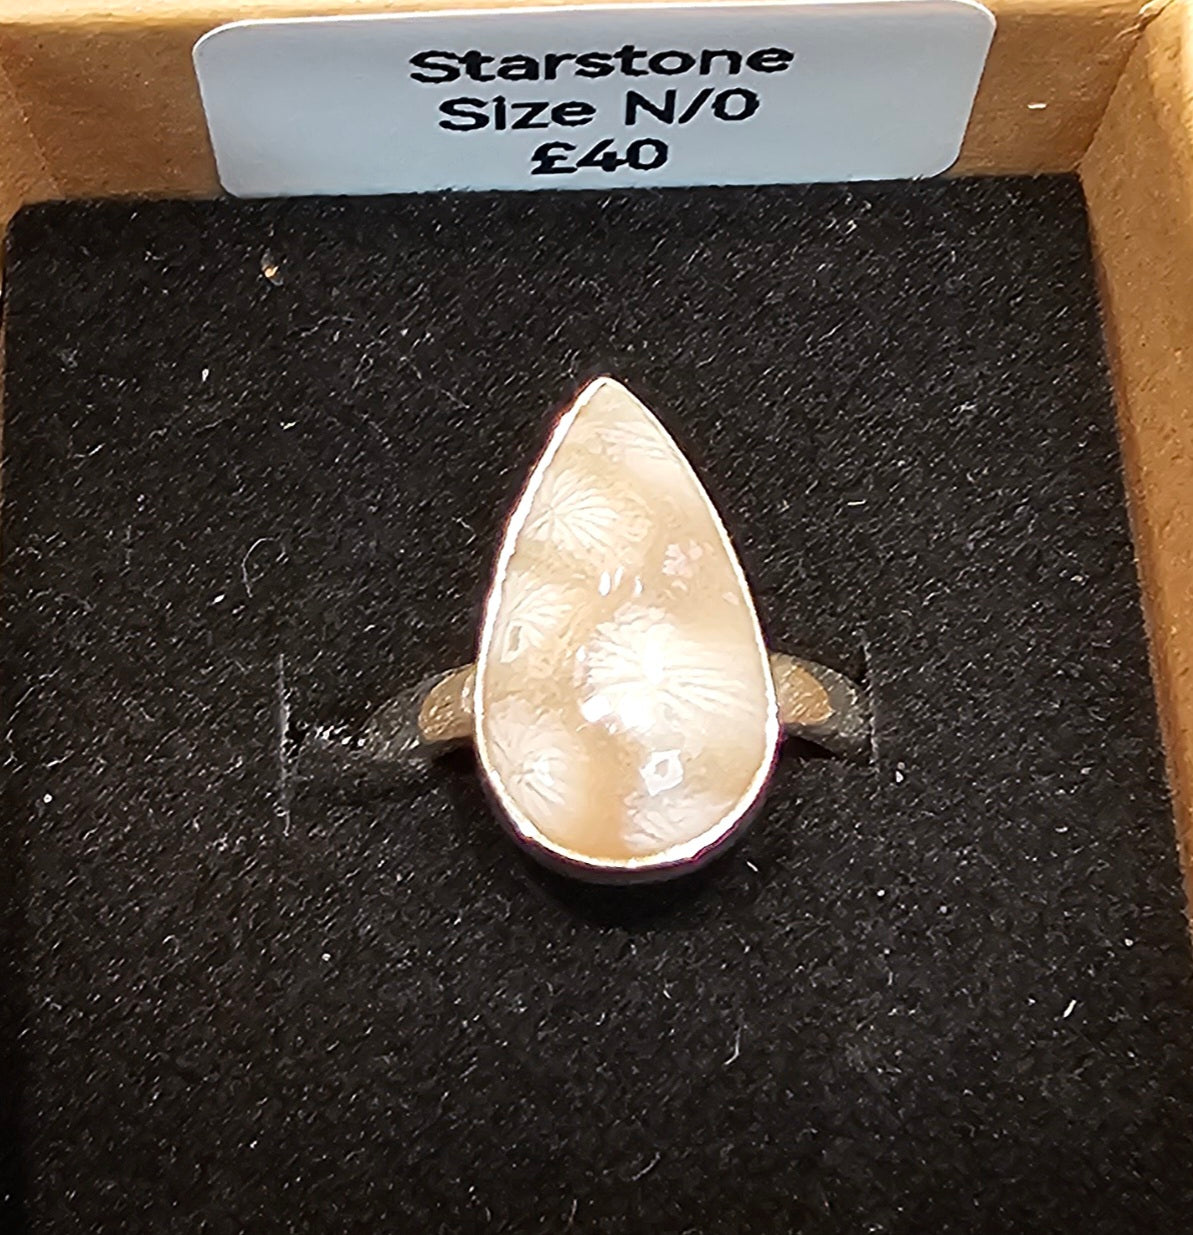 Starstone ring size N/O